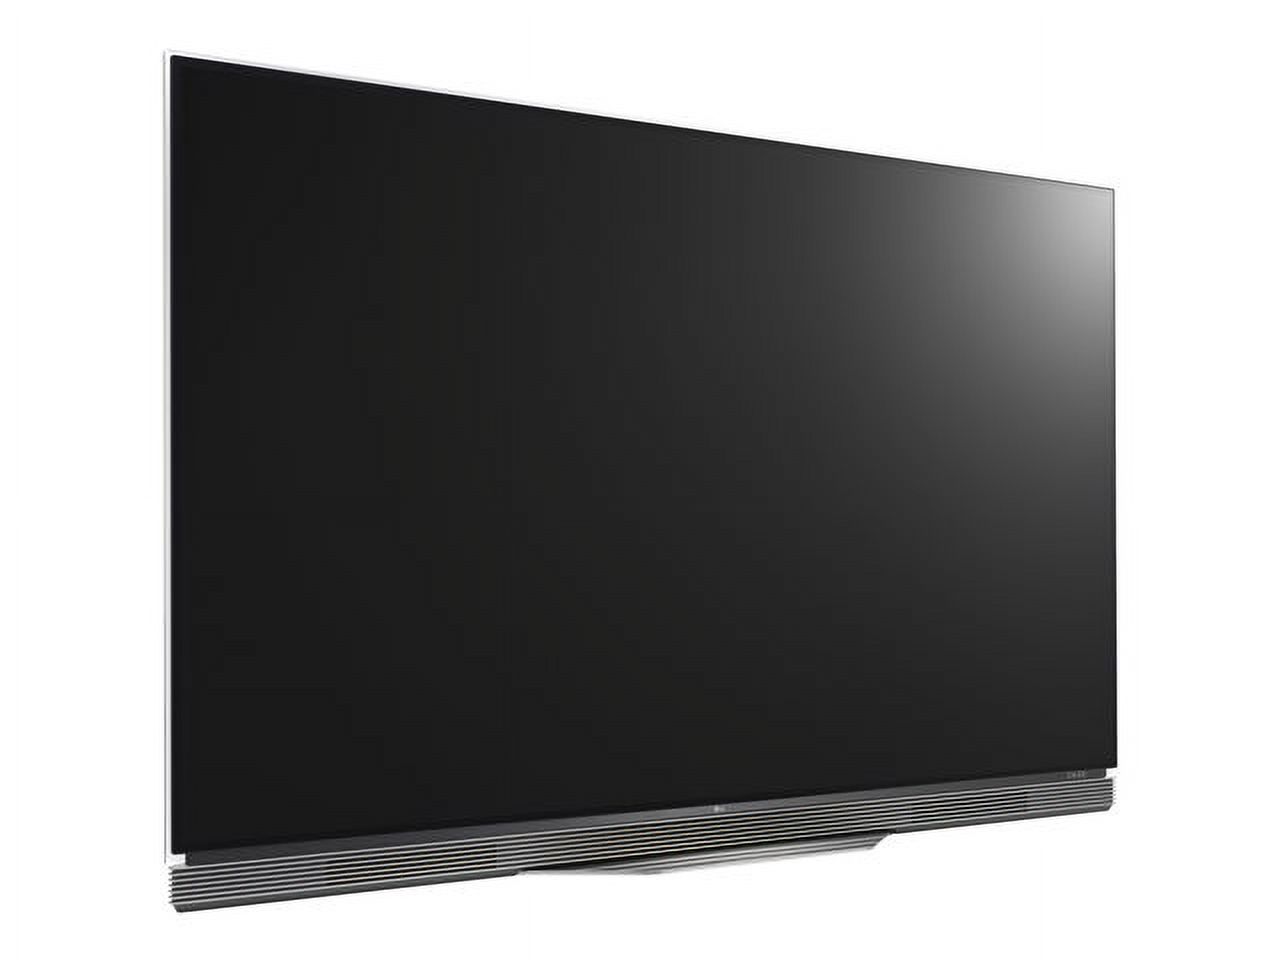 LG 55" Class 4K UHDTV (2160p) Smart OLED TV (OLED55E6P) - image 2 of 15